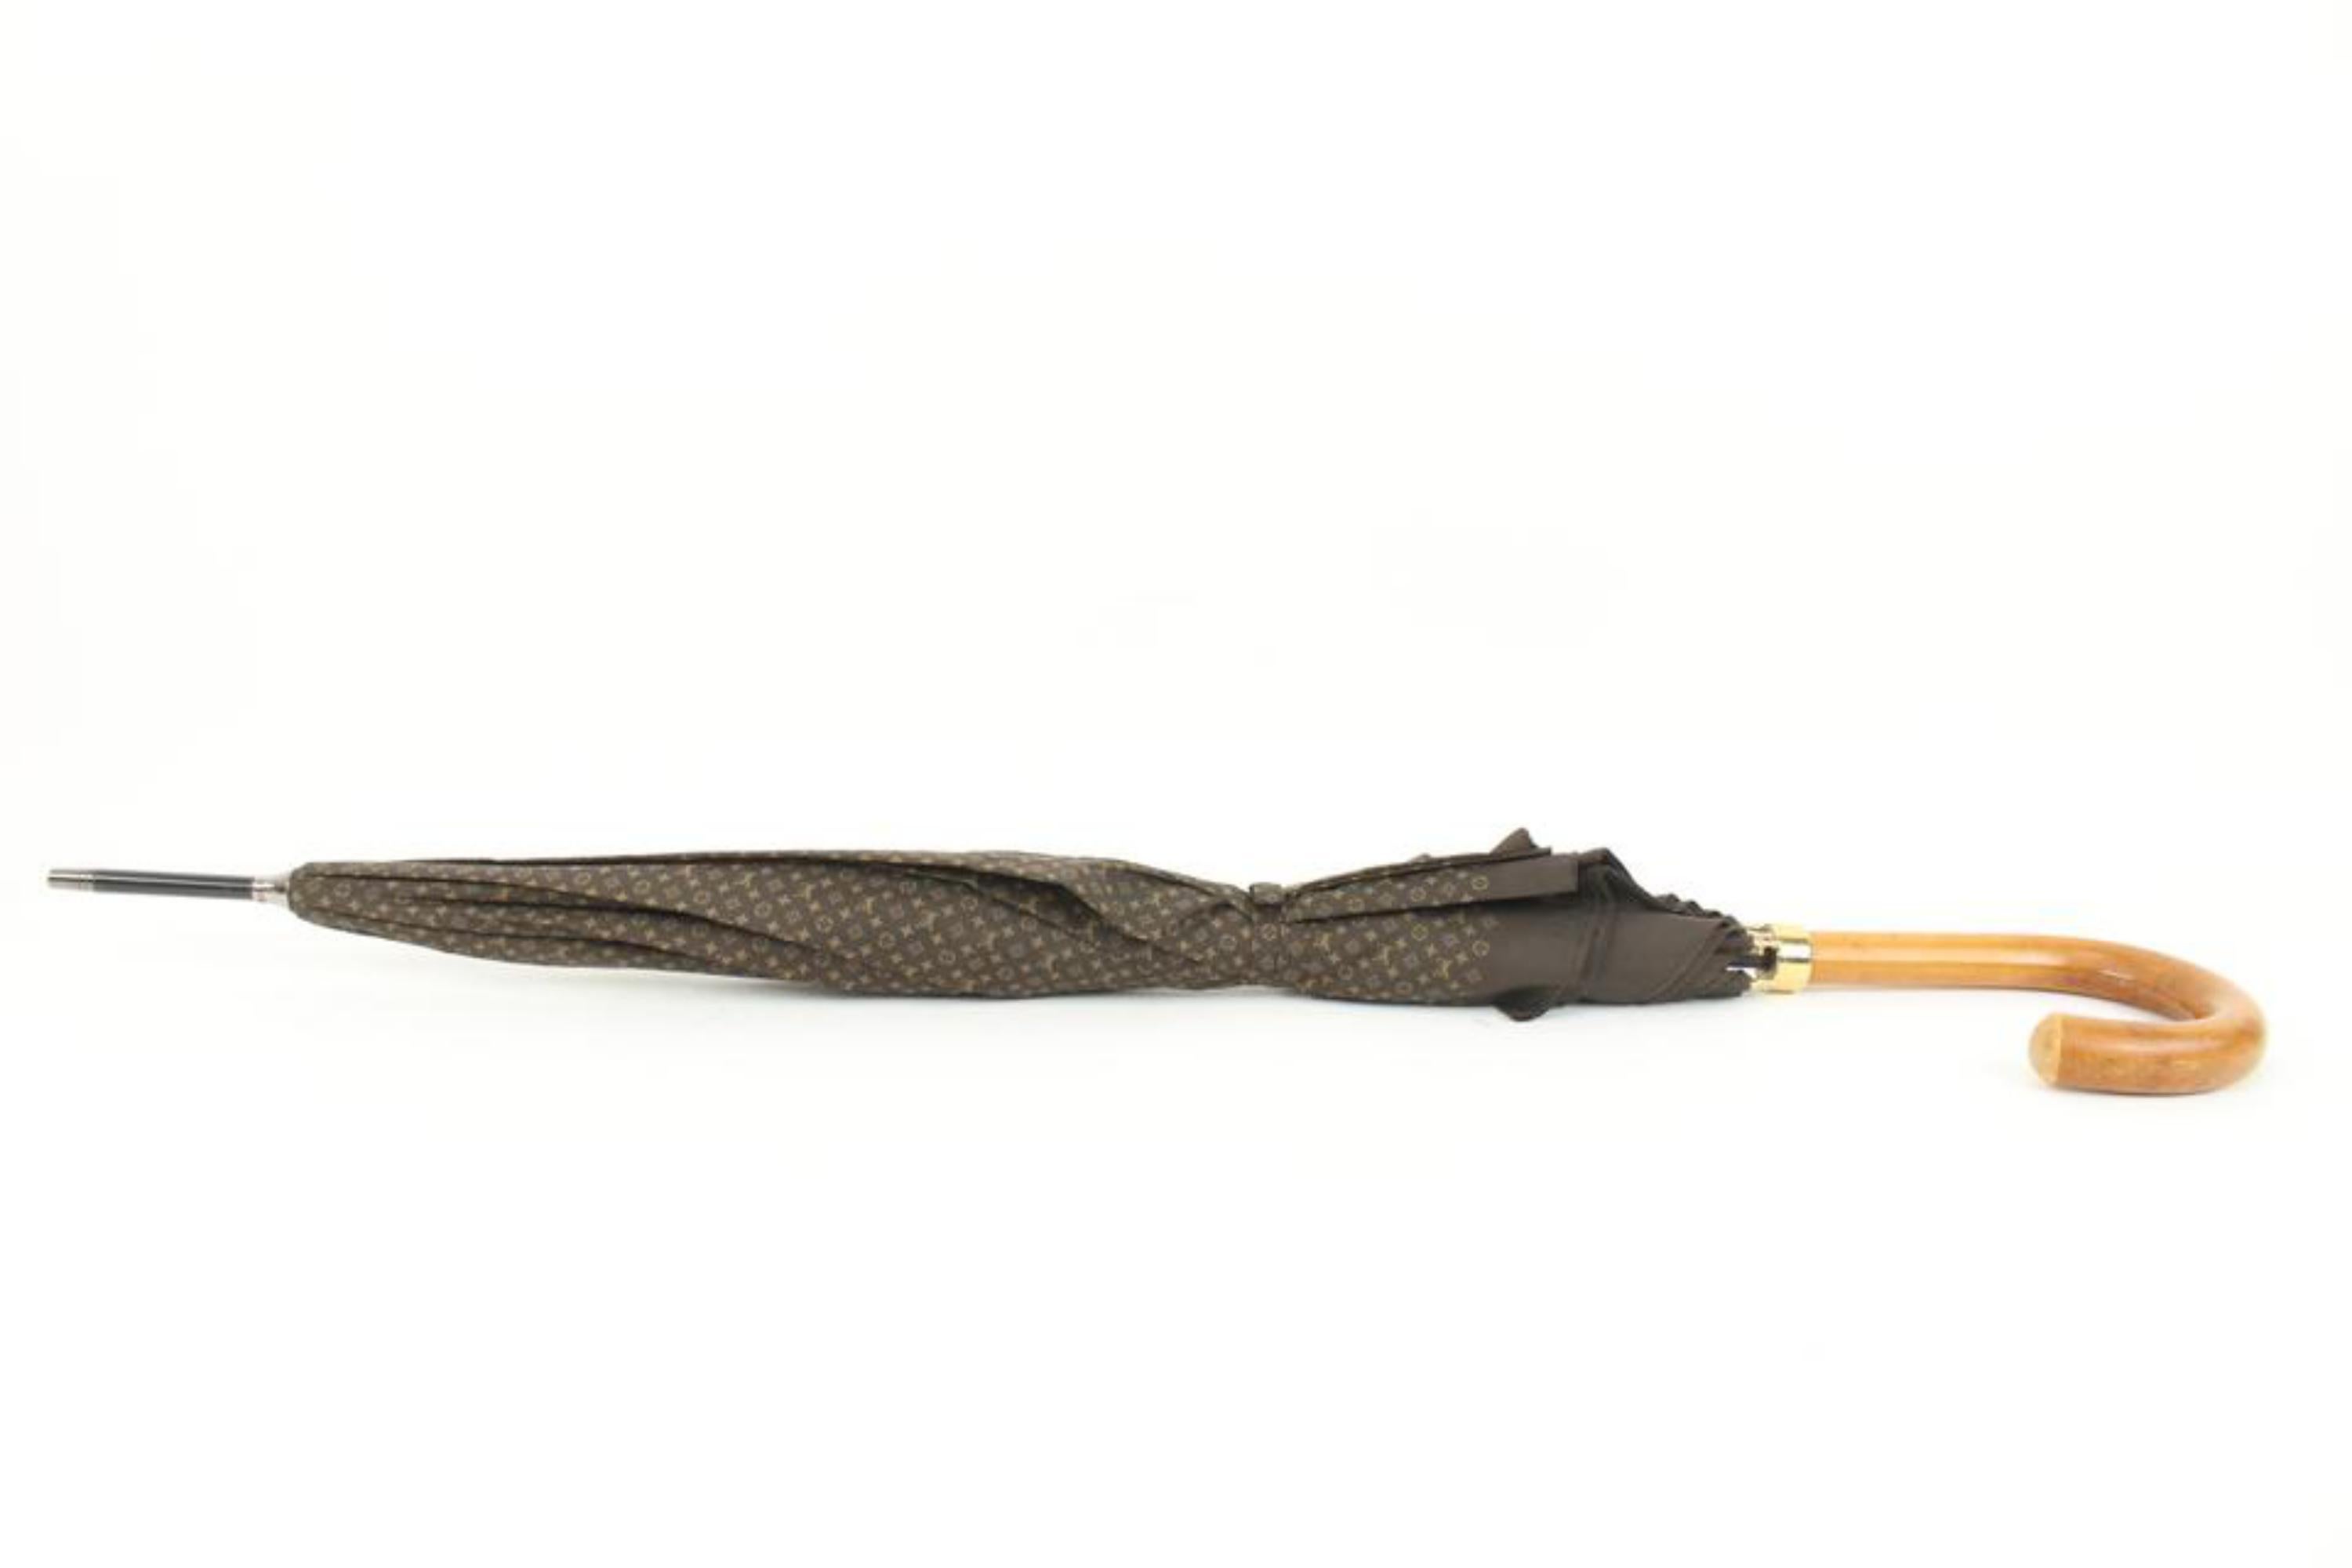 Louis Vuitton Monogram LV Umbrella 41lk76
Made In: France
Measurements: Length:  34.5